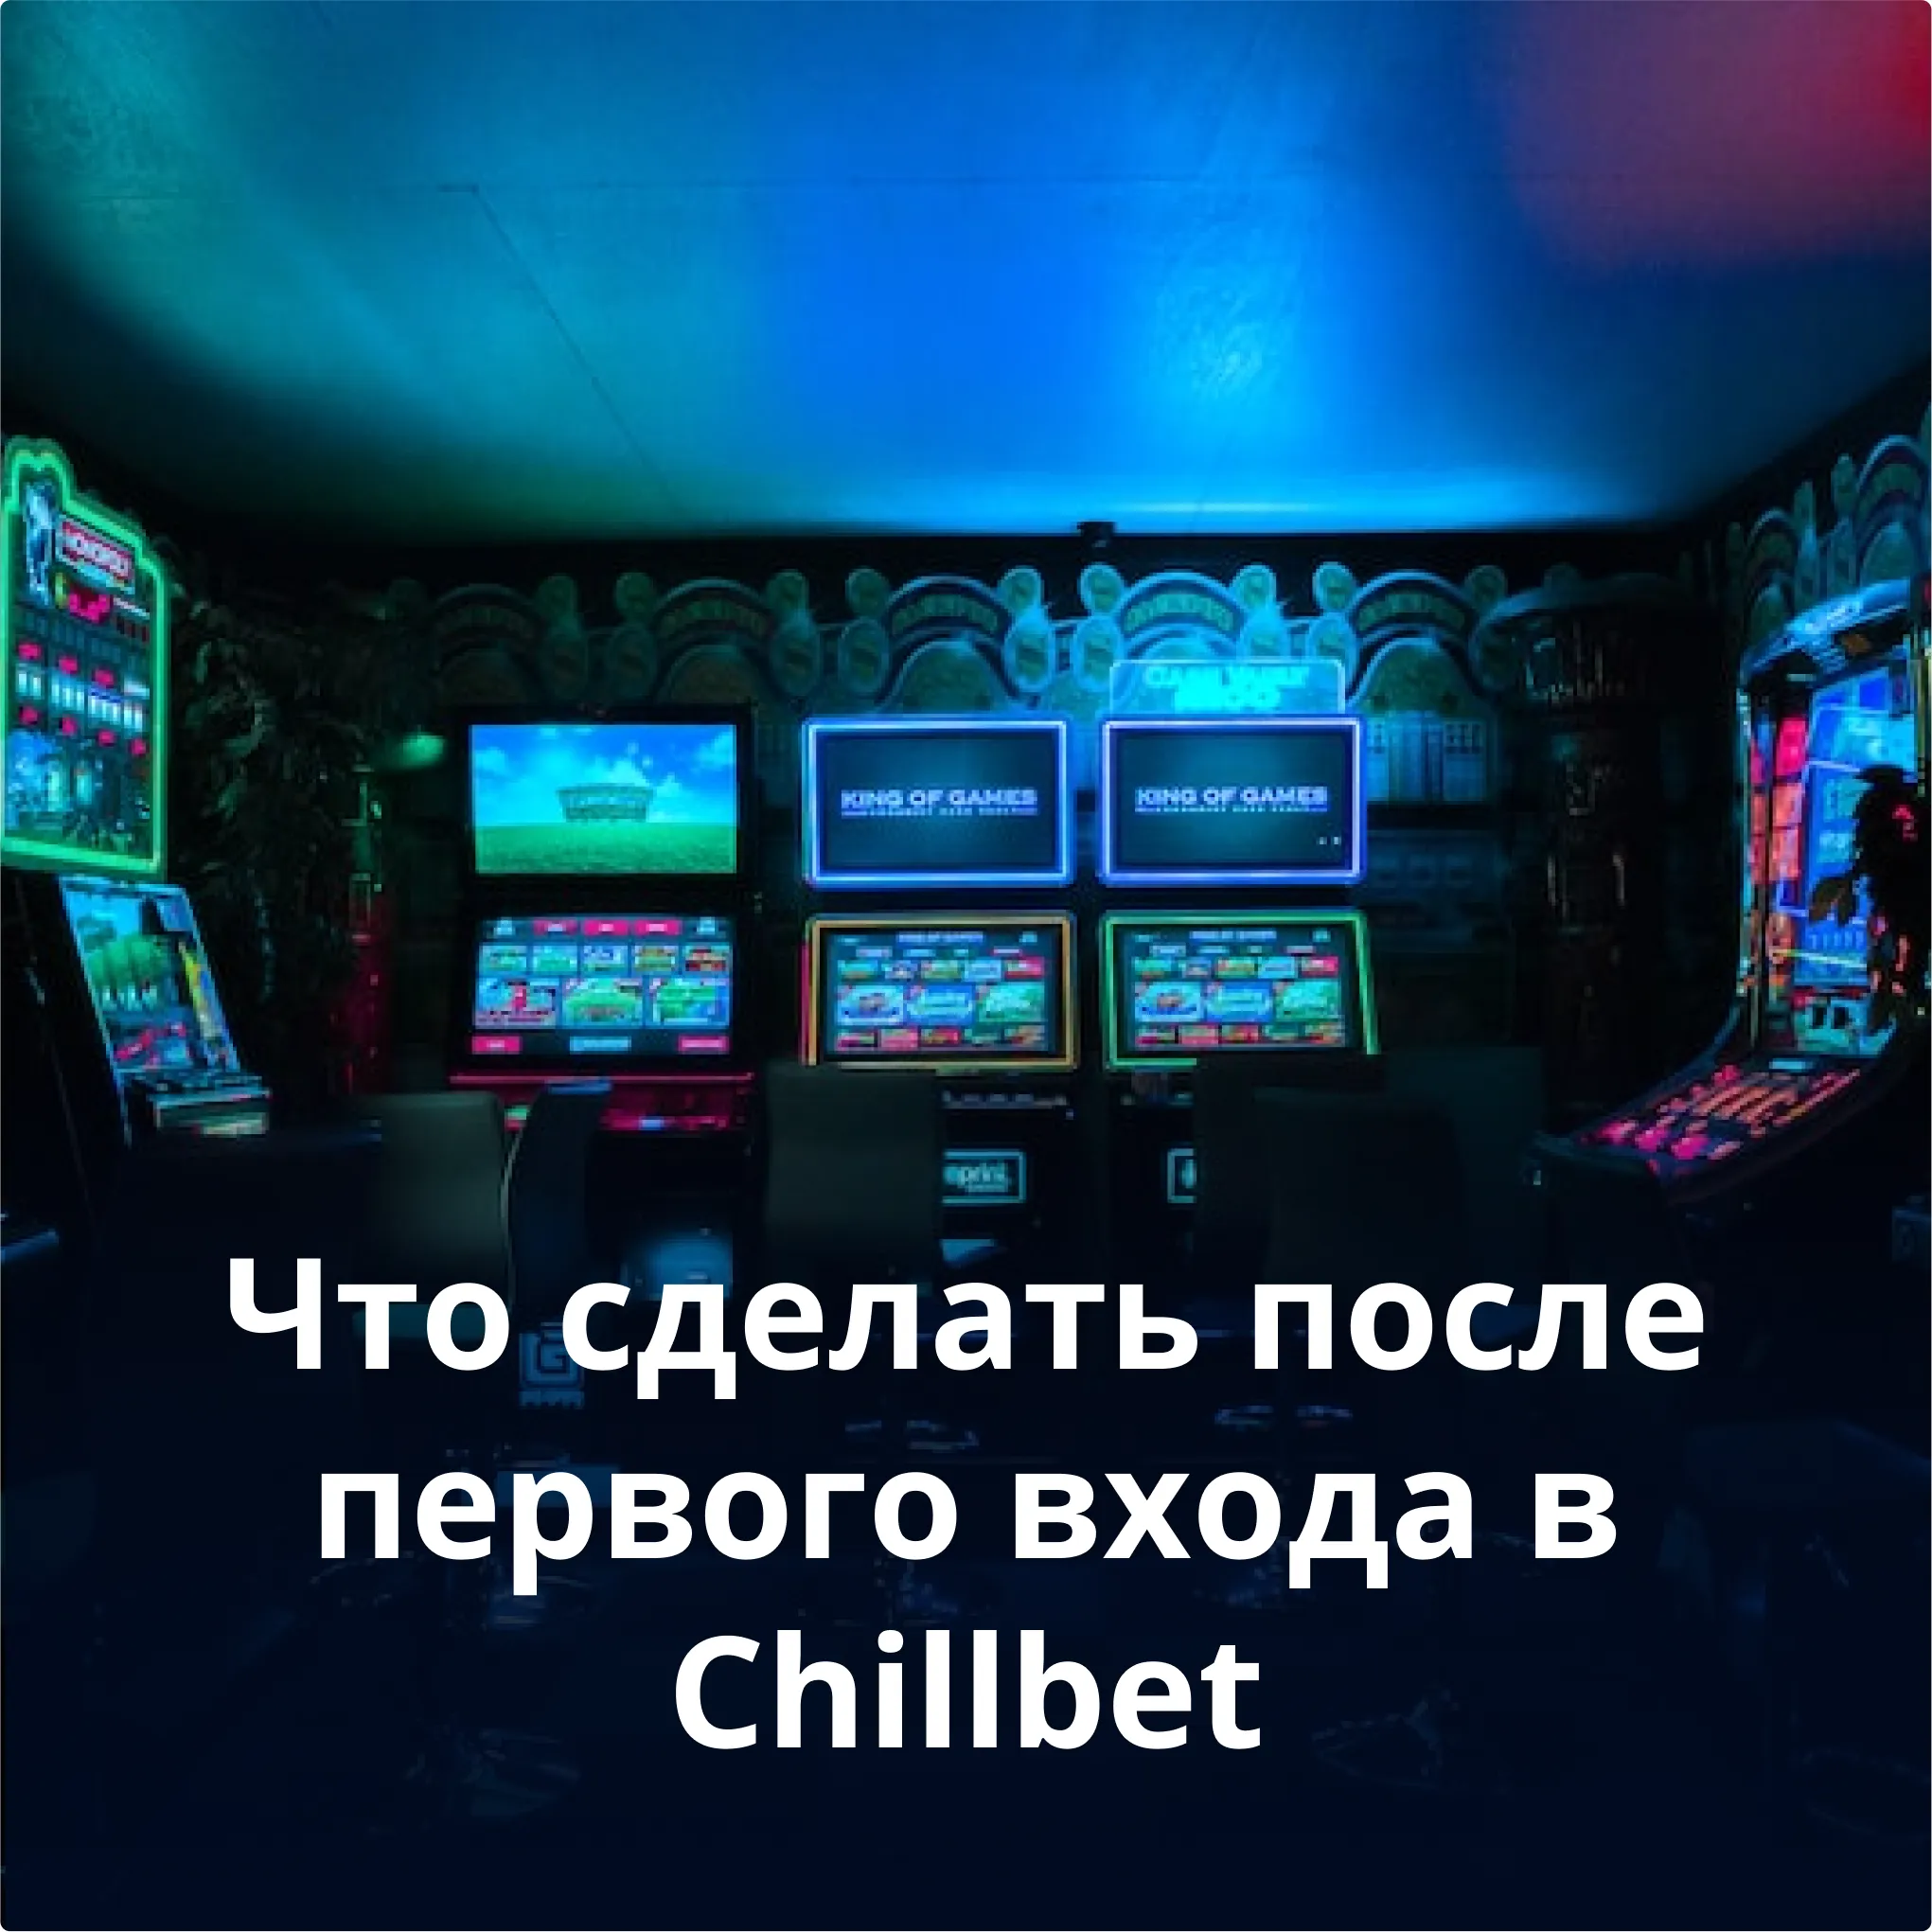 Chillbet